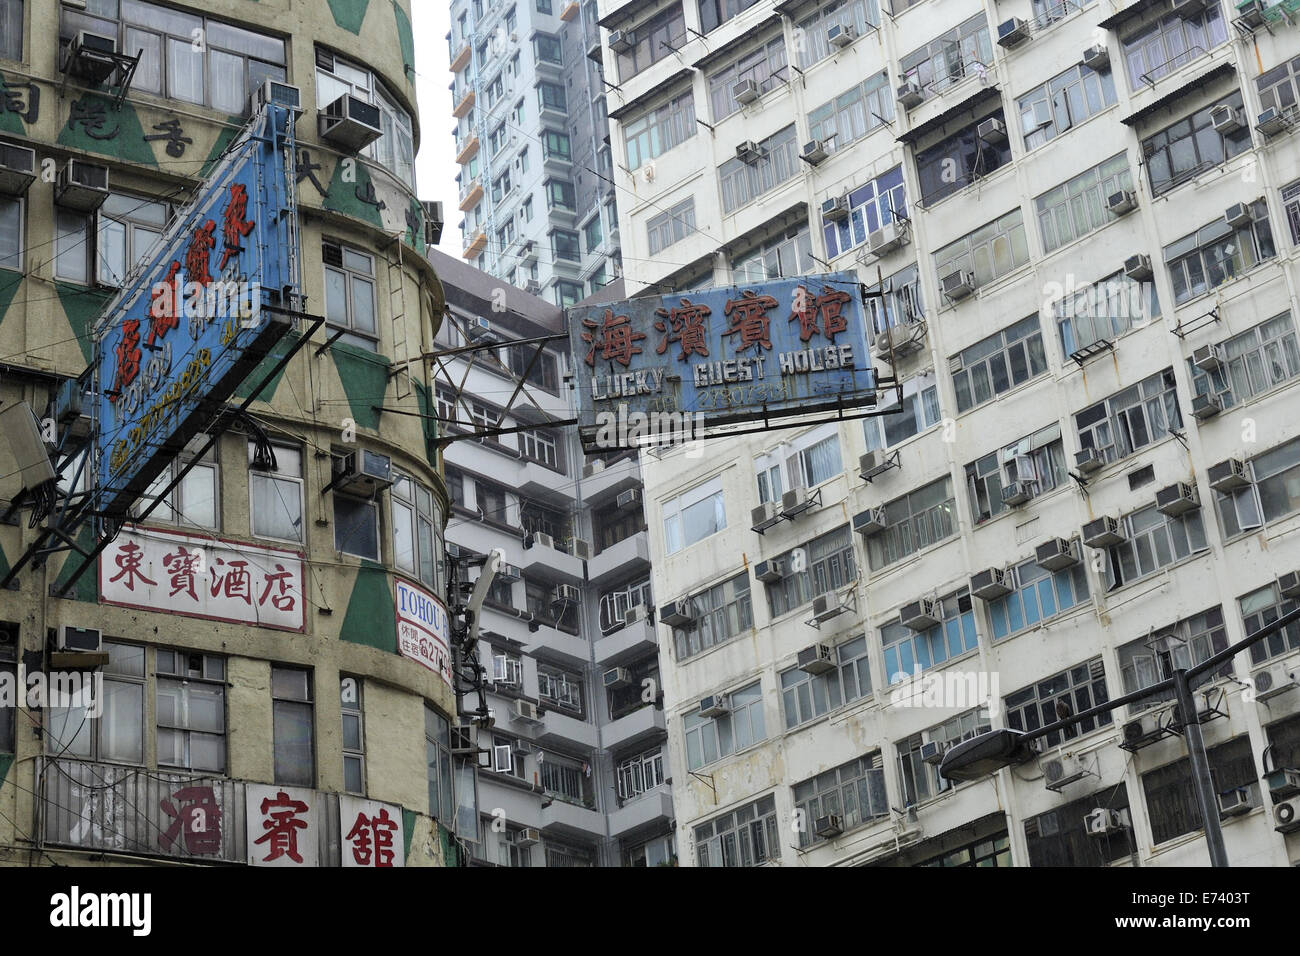 Signs advertising accommodation, amongst buildings of apartments and flats. Kowloon, Hong Kong, China Stock Photo